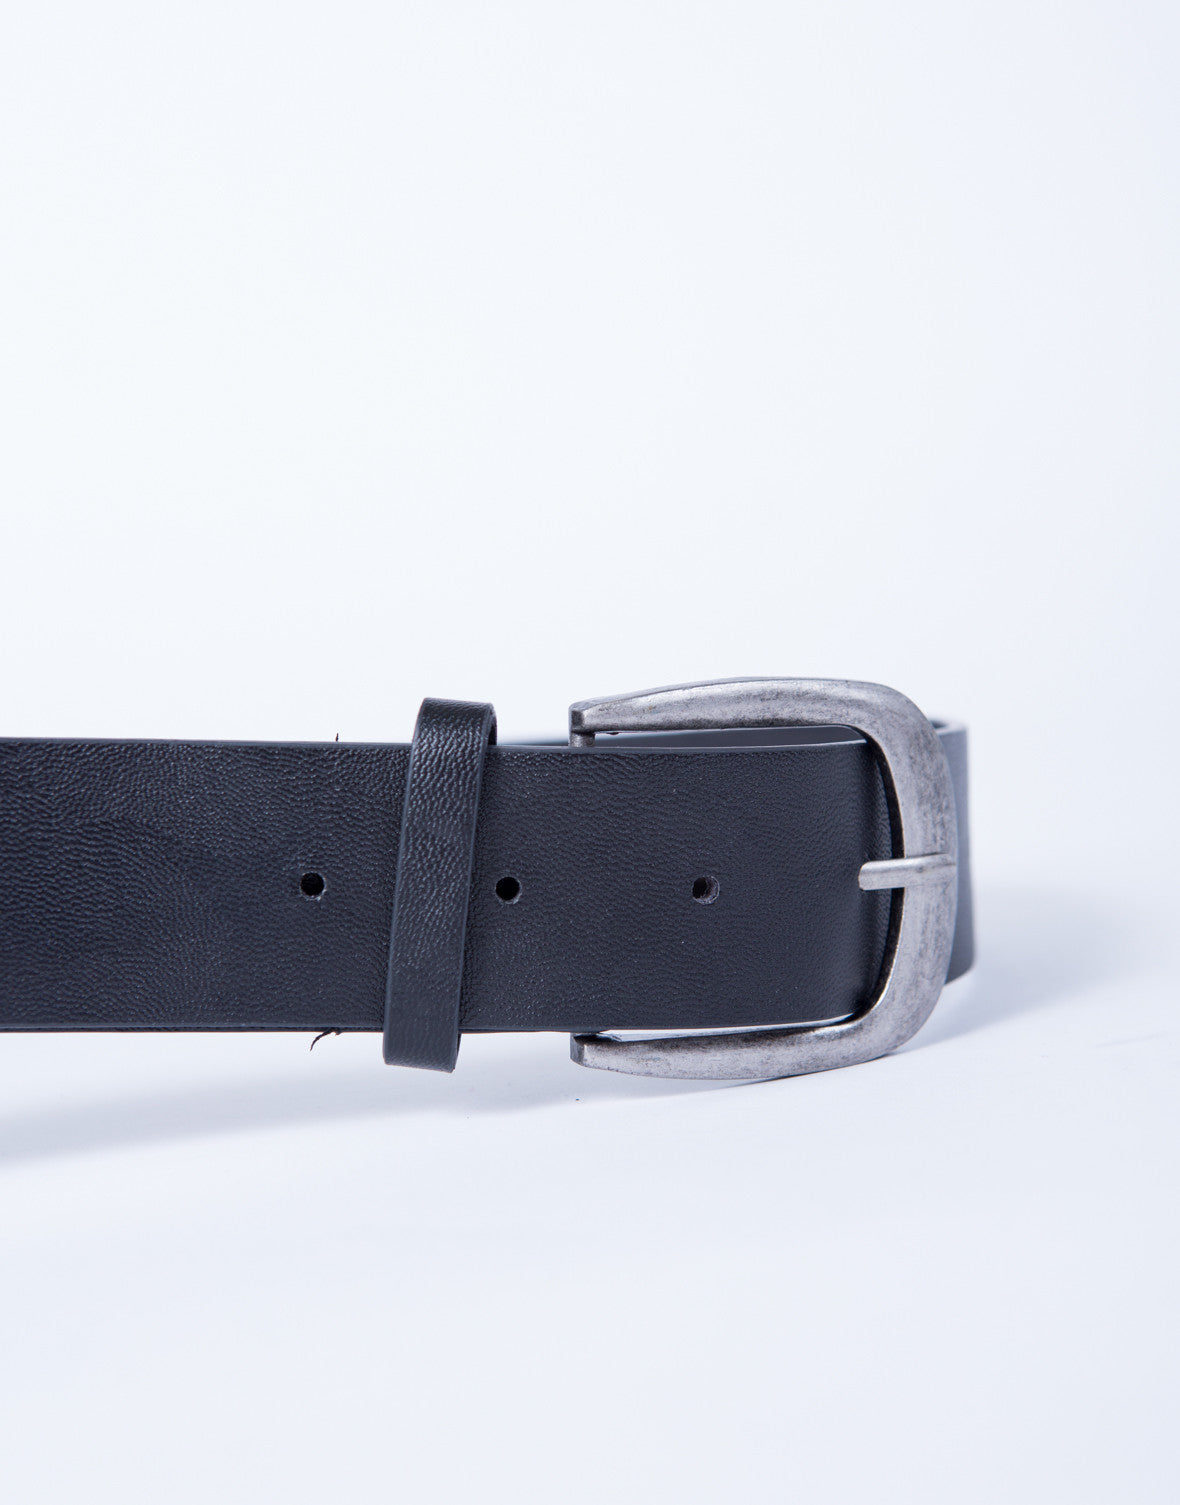 Leather Pocket Pouch Belt - Black Leather Belt - Leather Fanny Pack ...